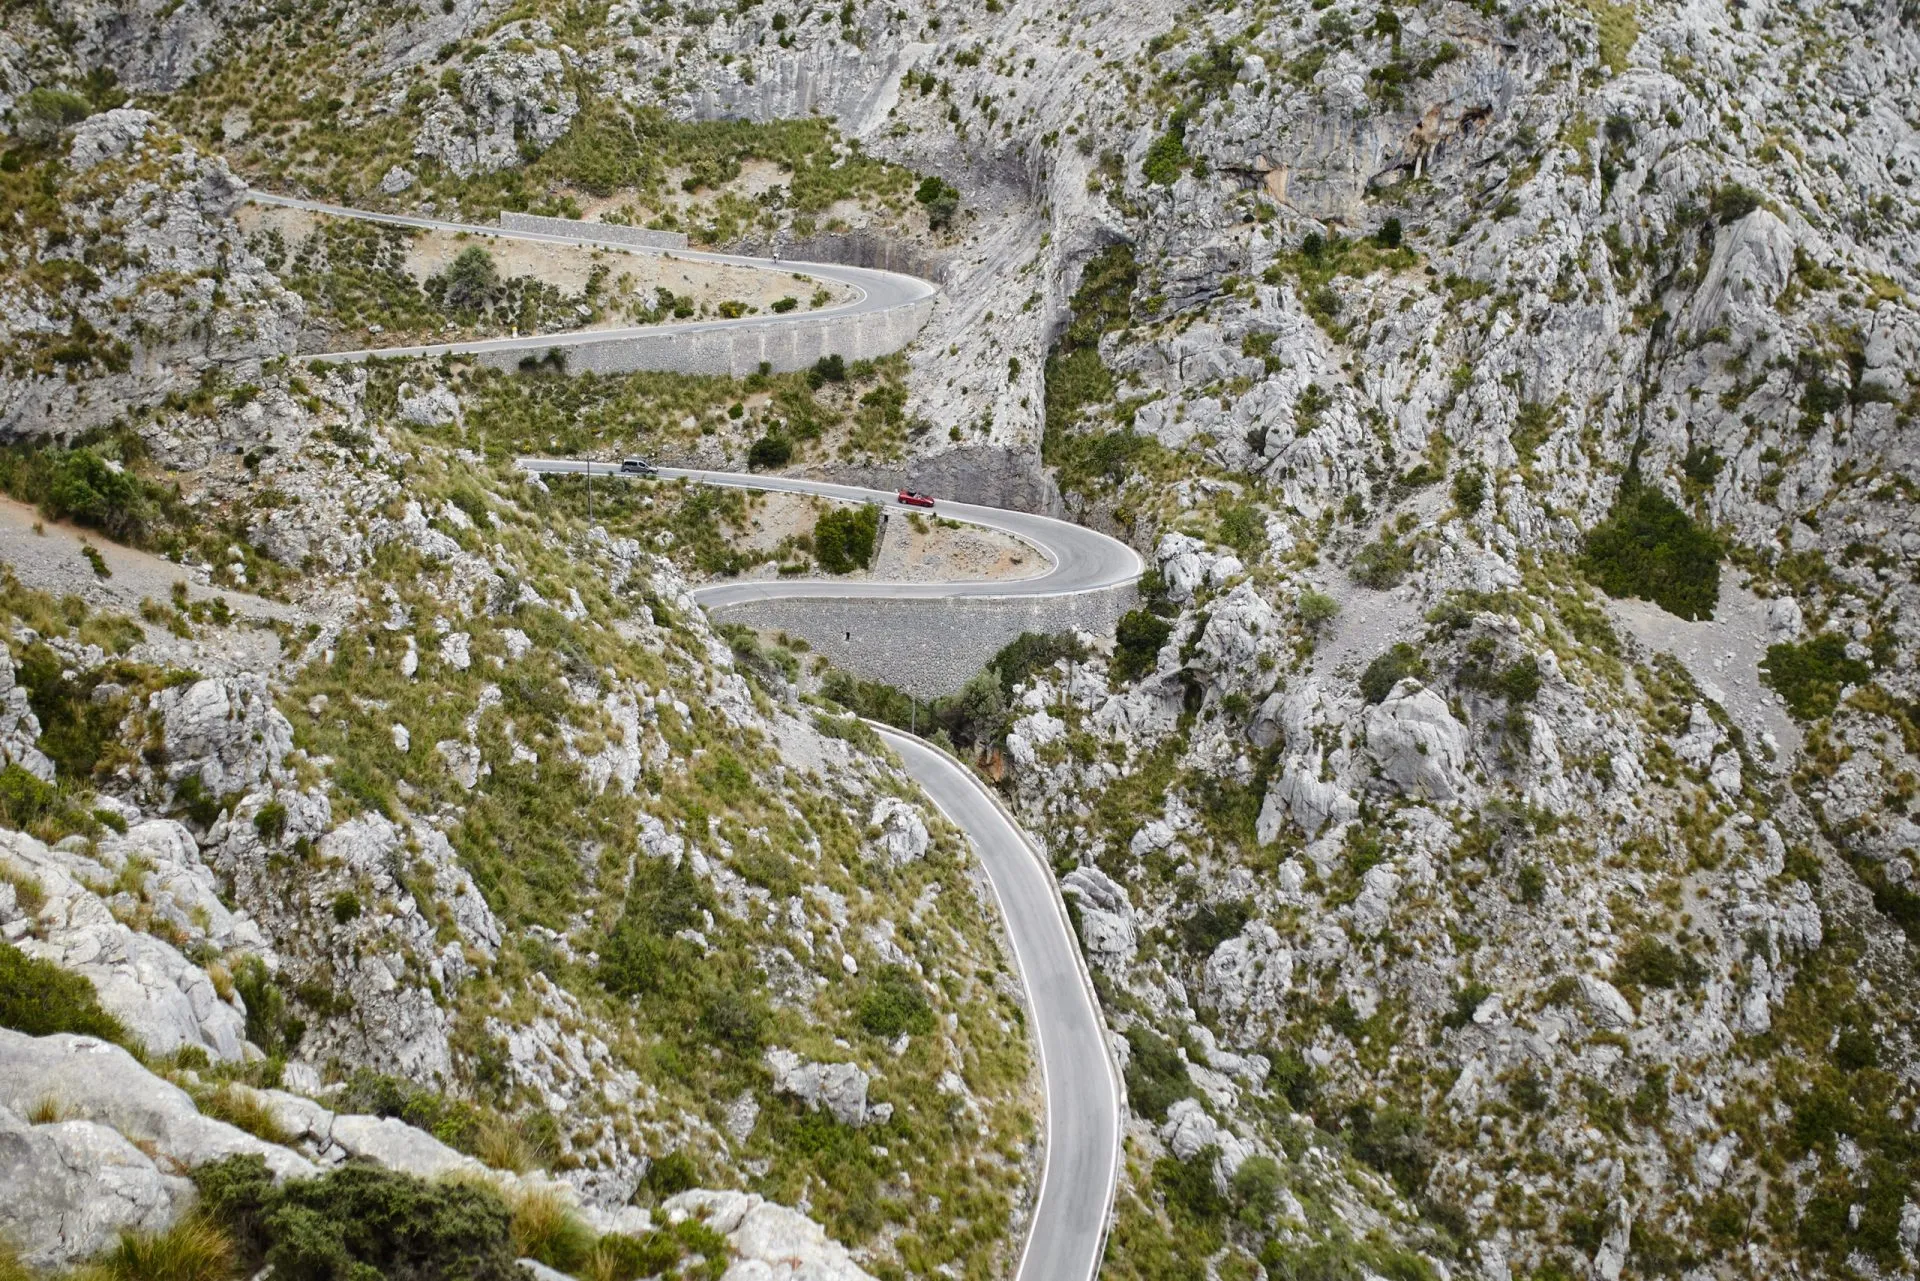 Cycling road Sa Colobra serpentine in Majorca, Spain.